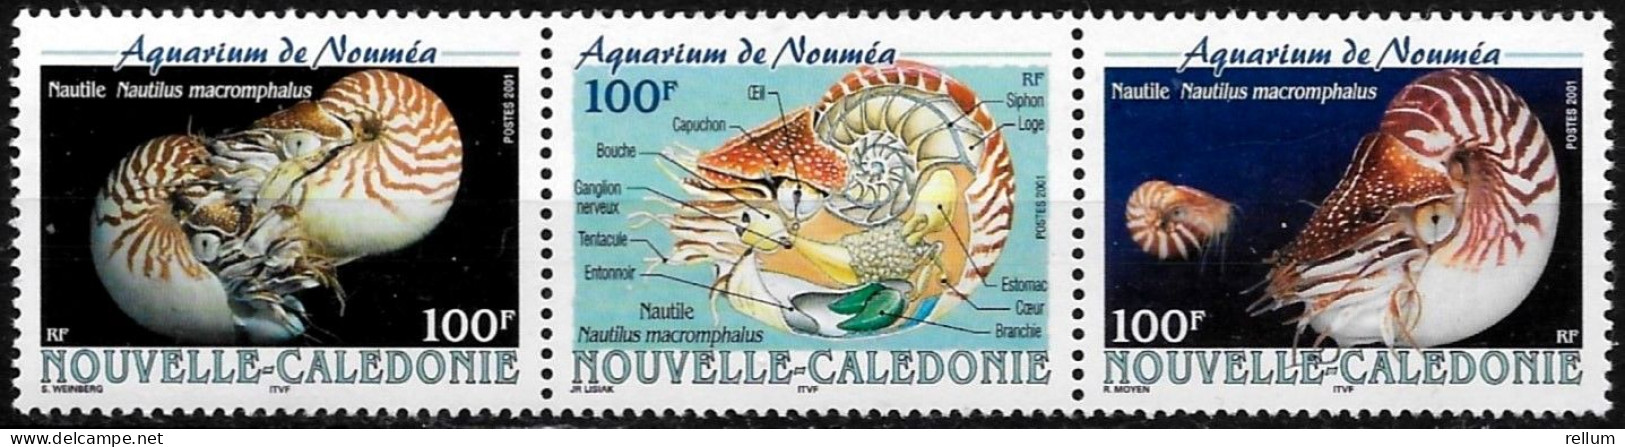 Nouvelle Calédonie 2001 - Yvert Et Tellier Nr. 840/842 Se Tenant - Michel Nr. 1234/1236 Zusammenhängend ** - Neufs